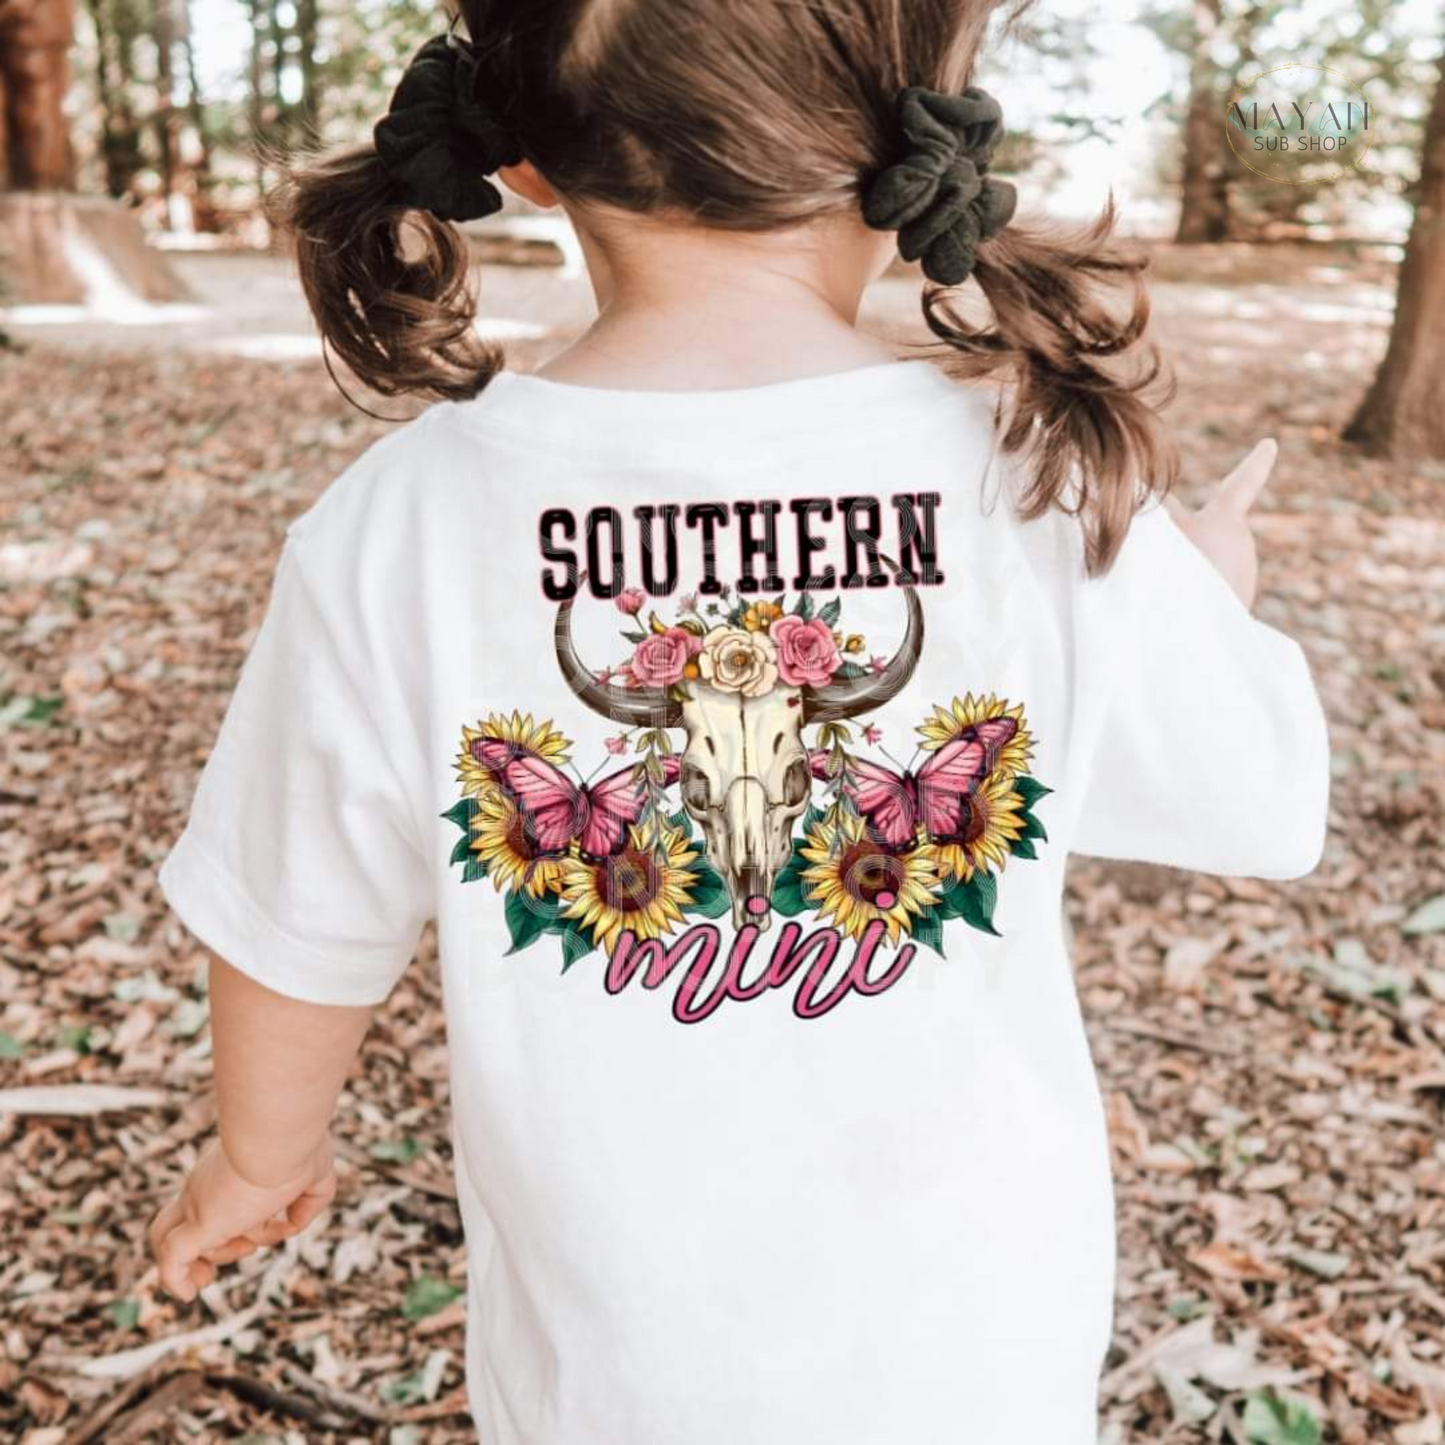 Southern Mini Shirt - Mayan Sub Shop